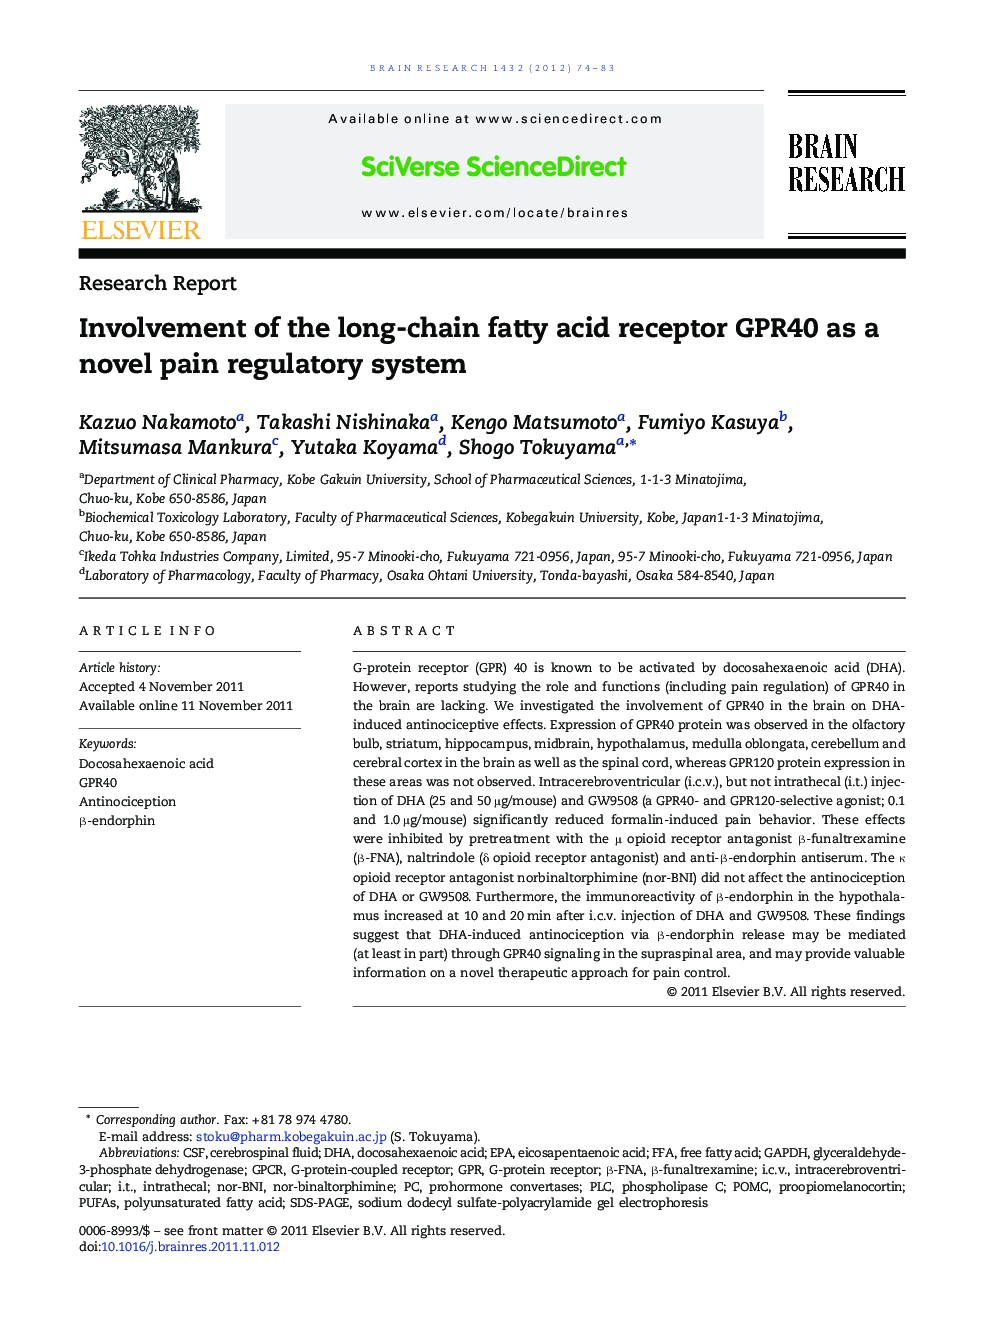 Involvement of the long-chain fatty acid receptor GPR40 as a novel pain regulatory system